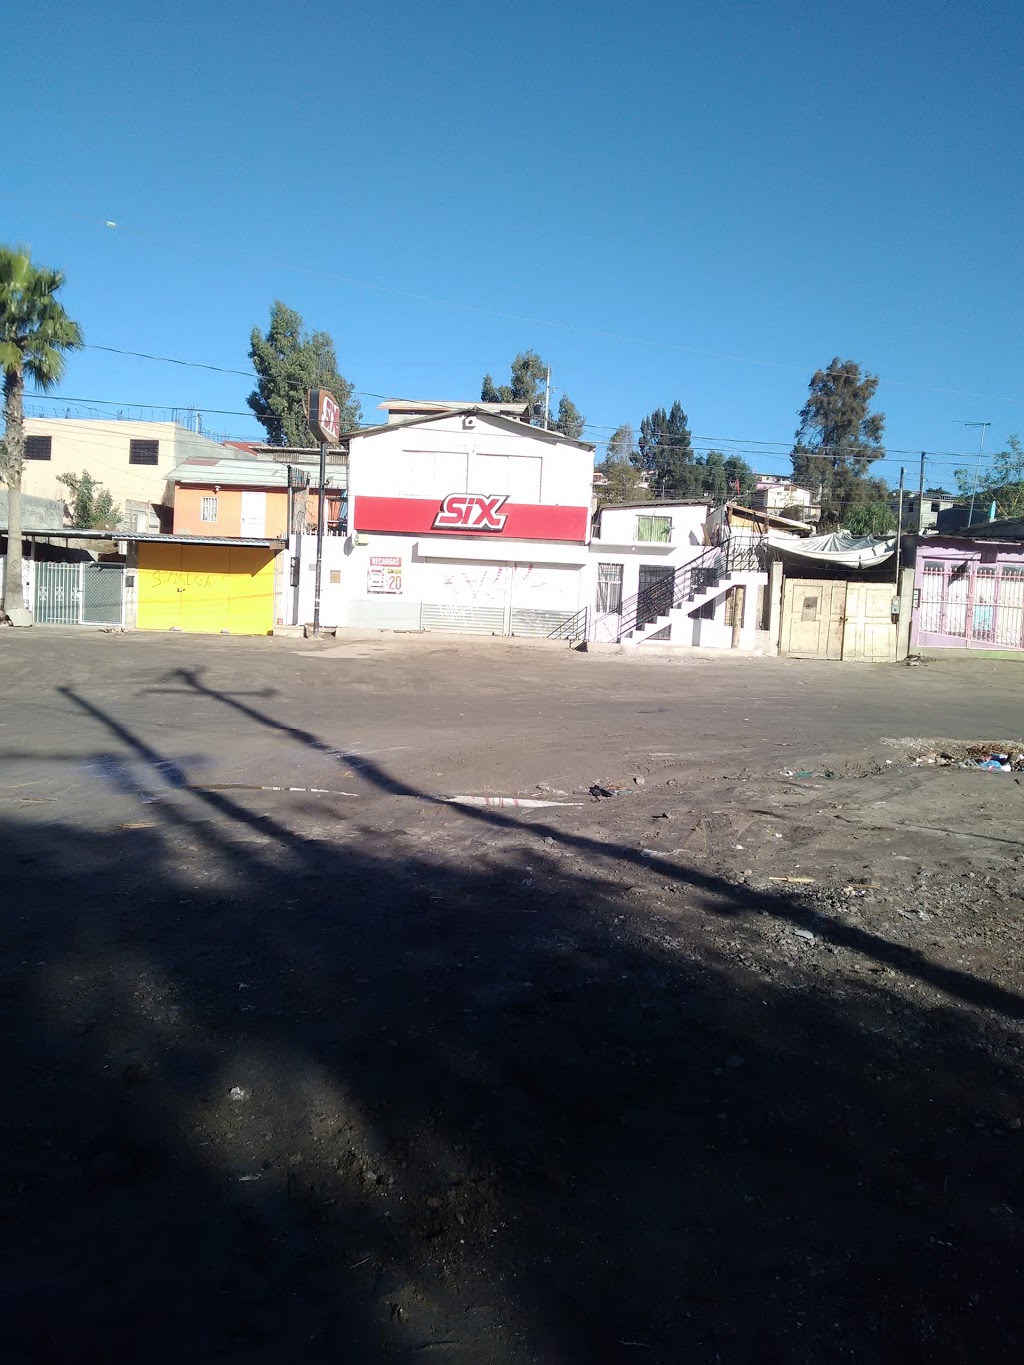 Tienda Six | Lomas Campestre, Cjon de Servicio 27364, Col Lomas del Valle, 22330 Tijuana, B.C., Mexico | Phone: 800 237 8392